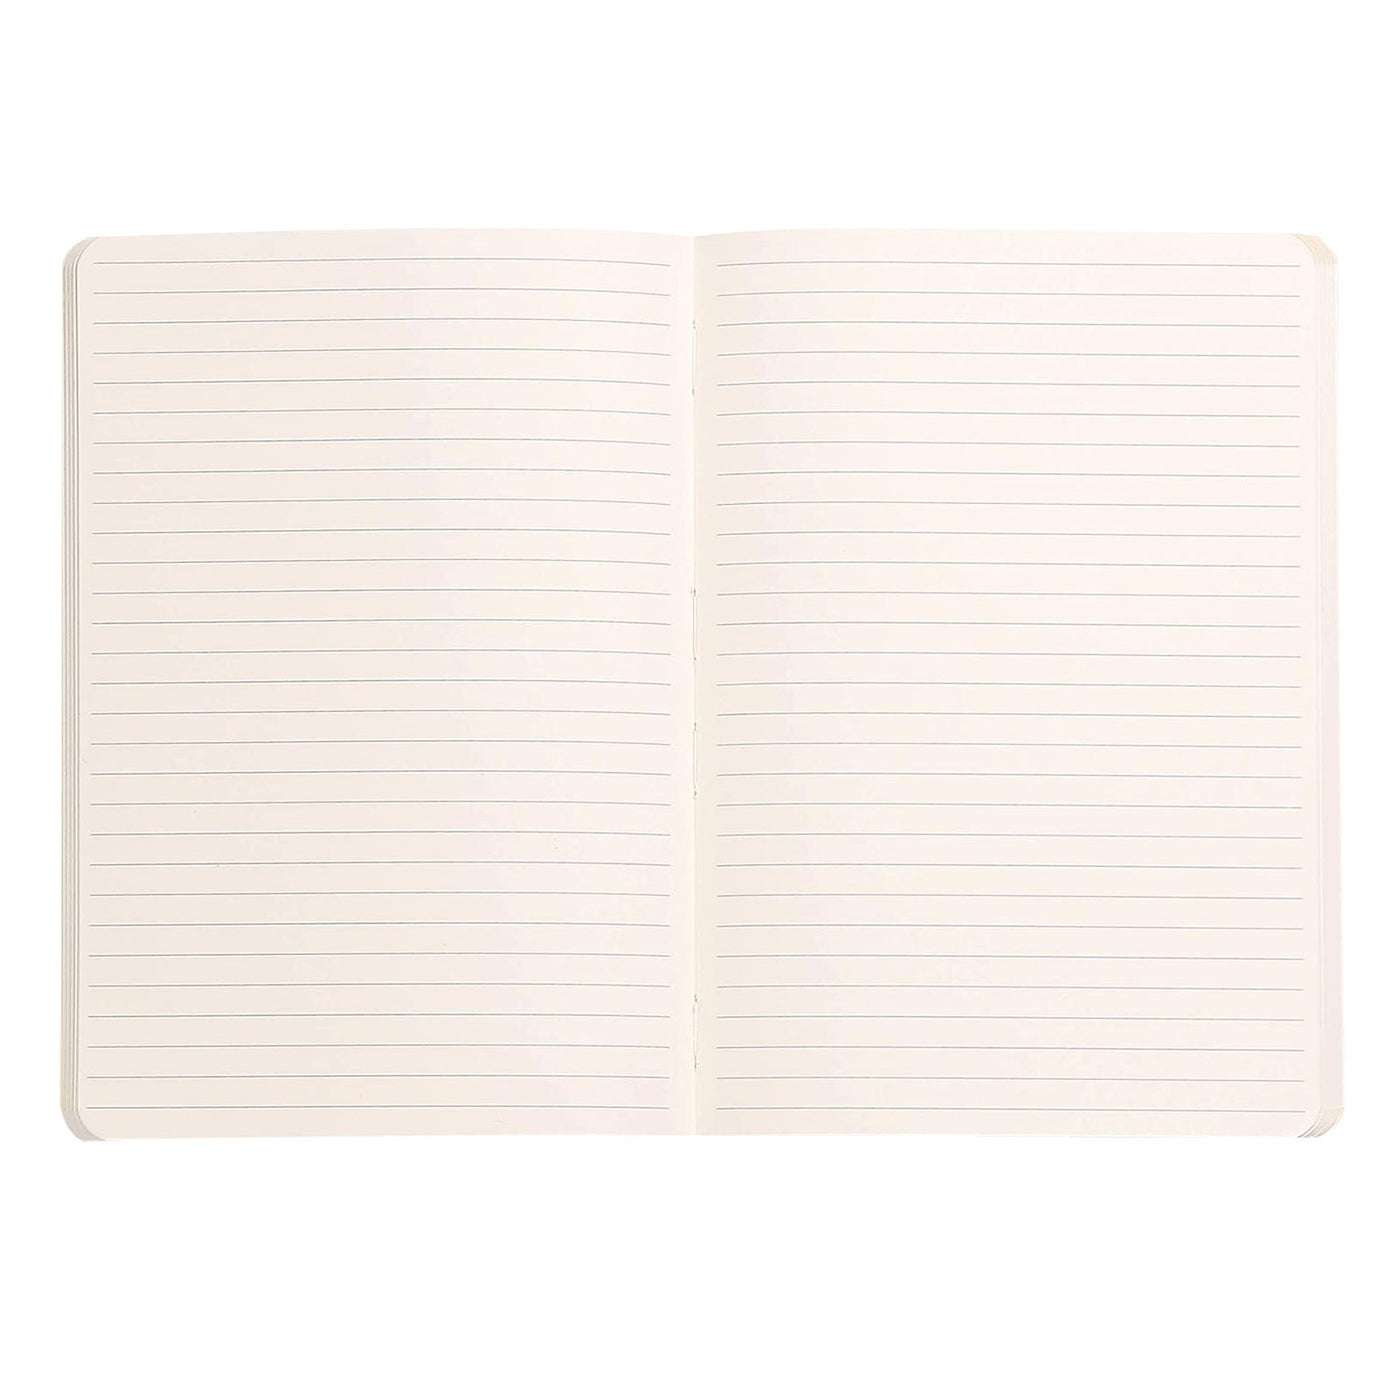 Rhodiarama Soft Cover Burgundy Notebook - A5 Ruled 2